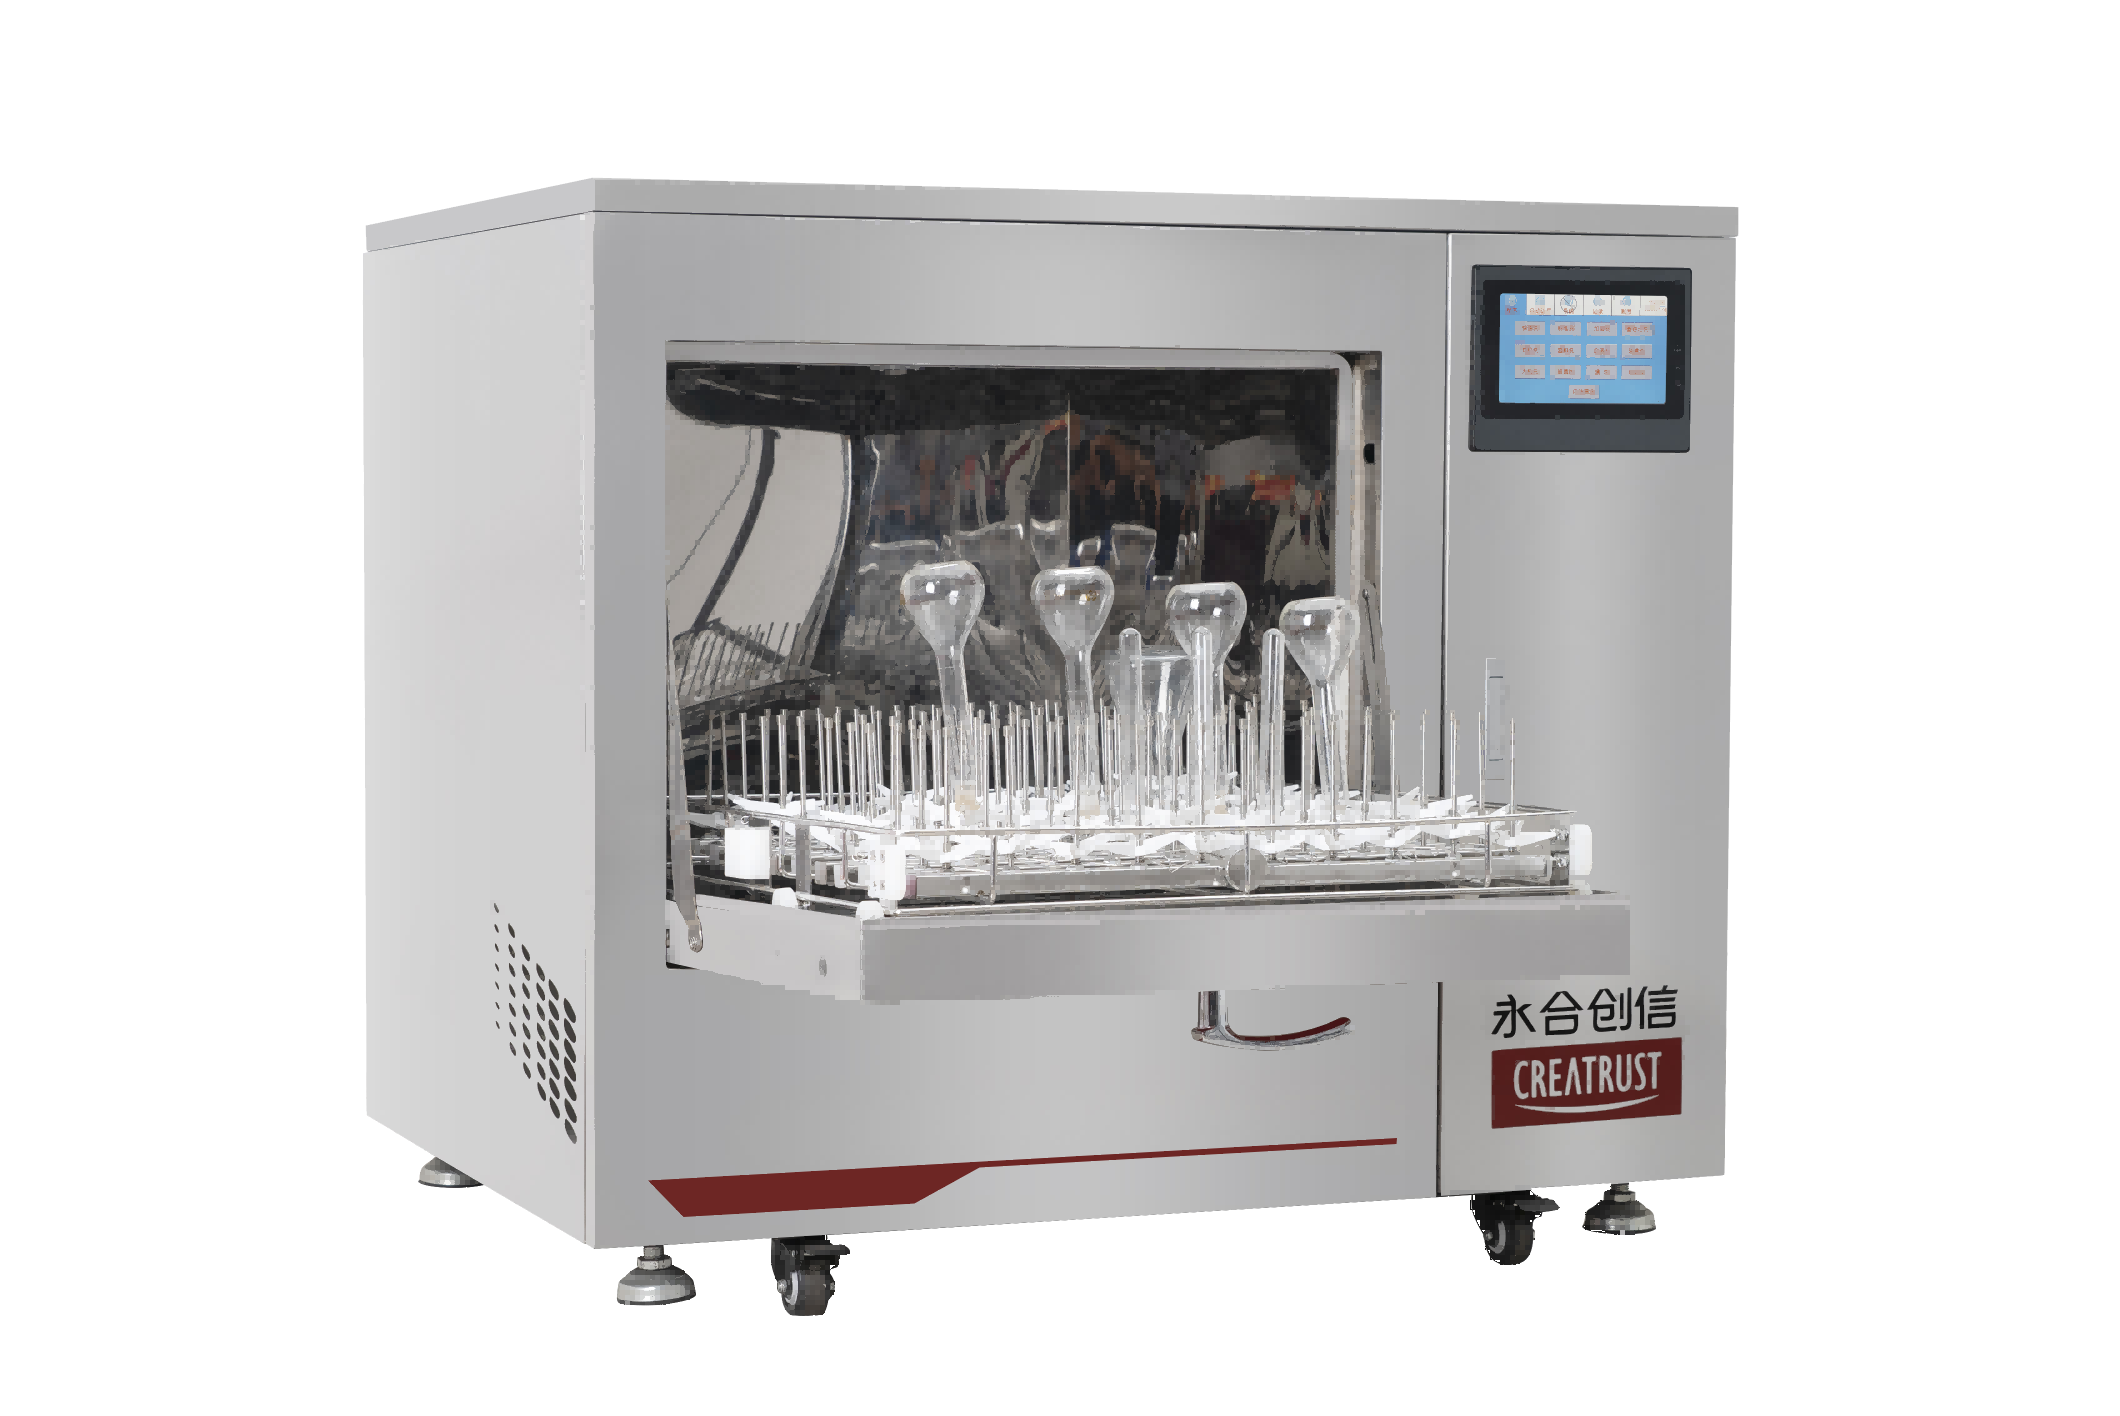 CTLW-120开门.png 实验室洗瓶机的普遍使用将提升整体质量检测水平。 行业资讯